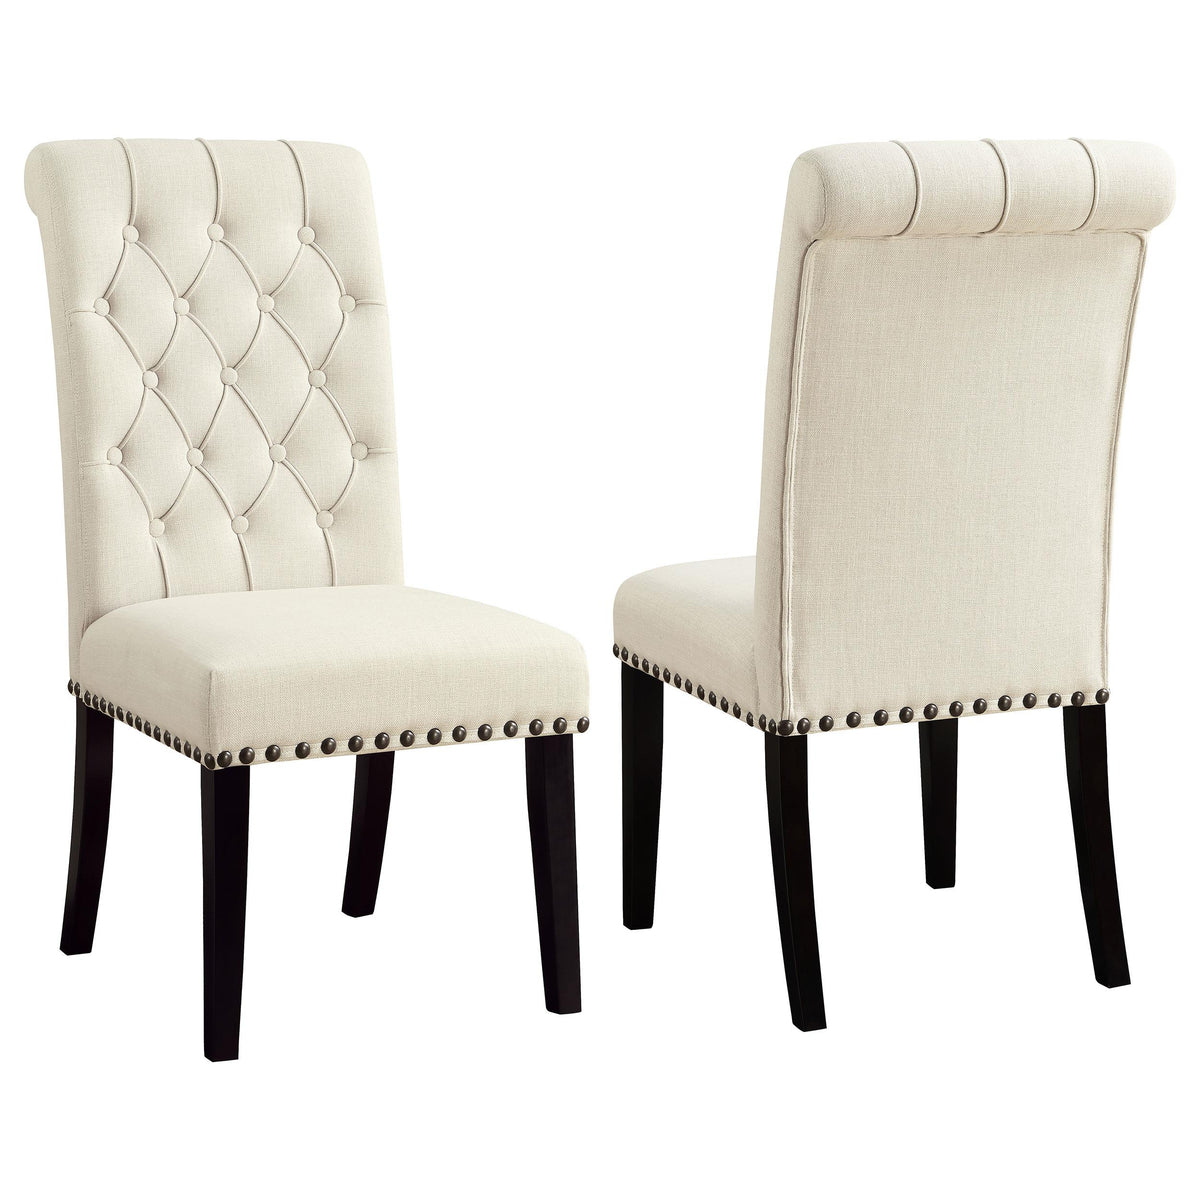 Alana Tufted Back Upholstered Side Chairs Beige (Set of 2)  Las Vegas Furniture Stores